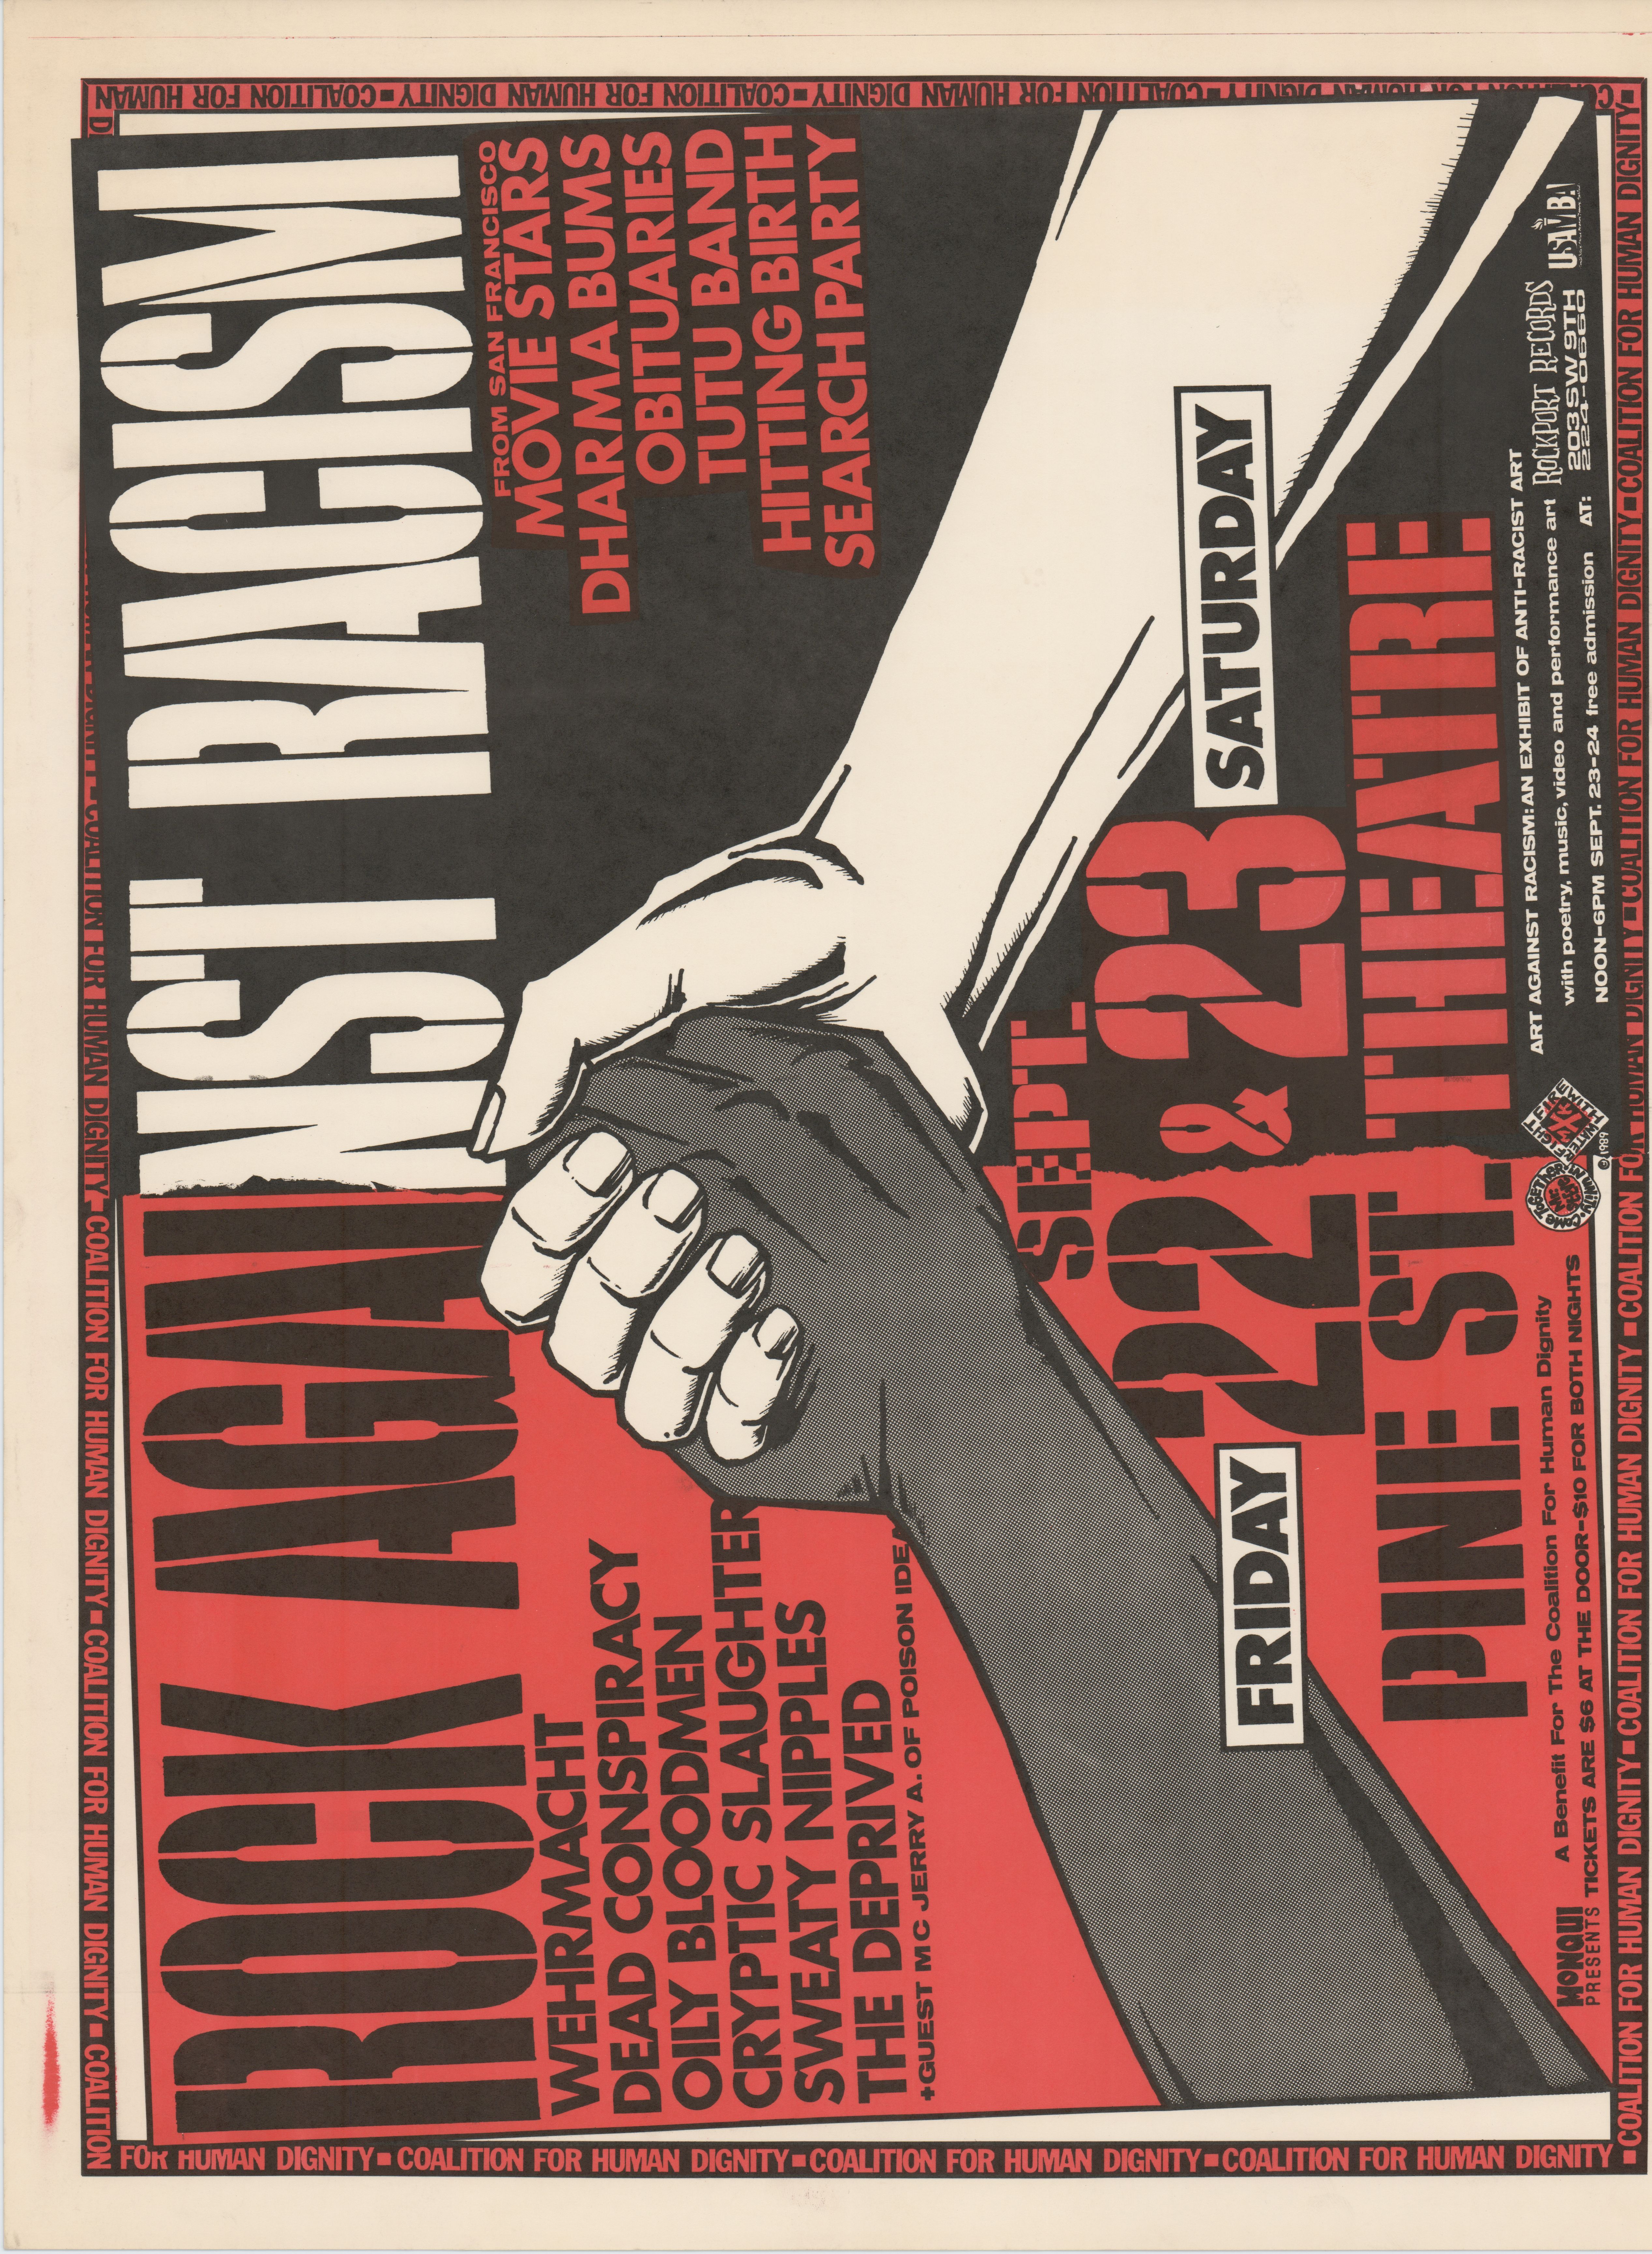 MXP-239.1 Rock Against Racism - Event 1989 Pine Street Theatre  Sep 23 Concert Poster